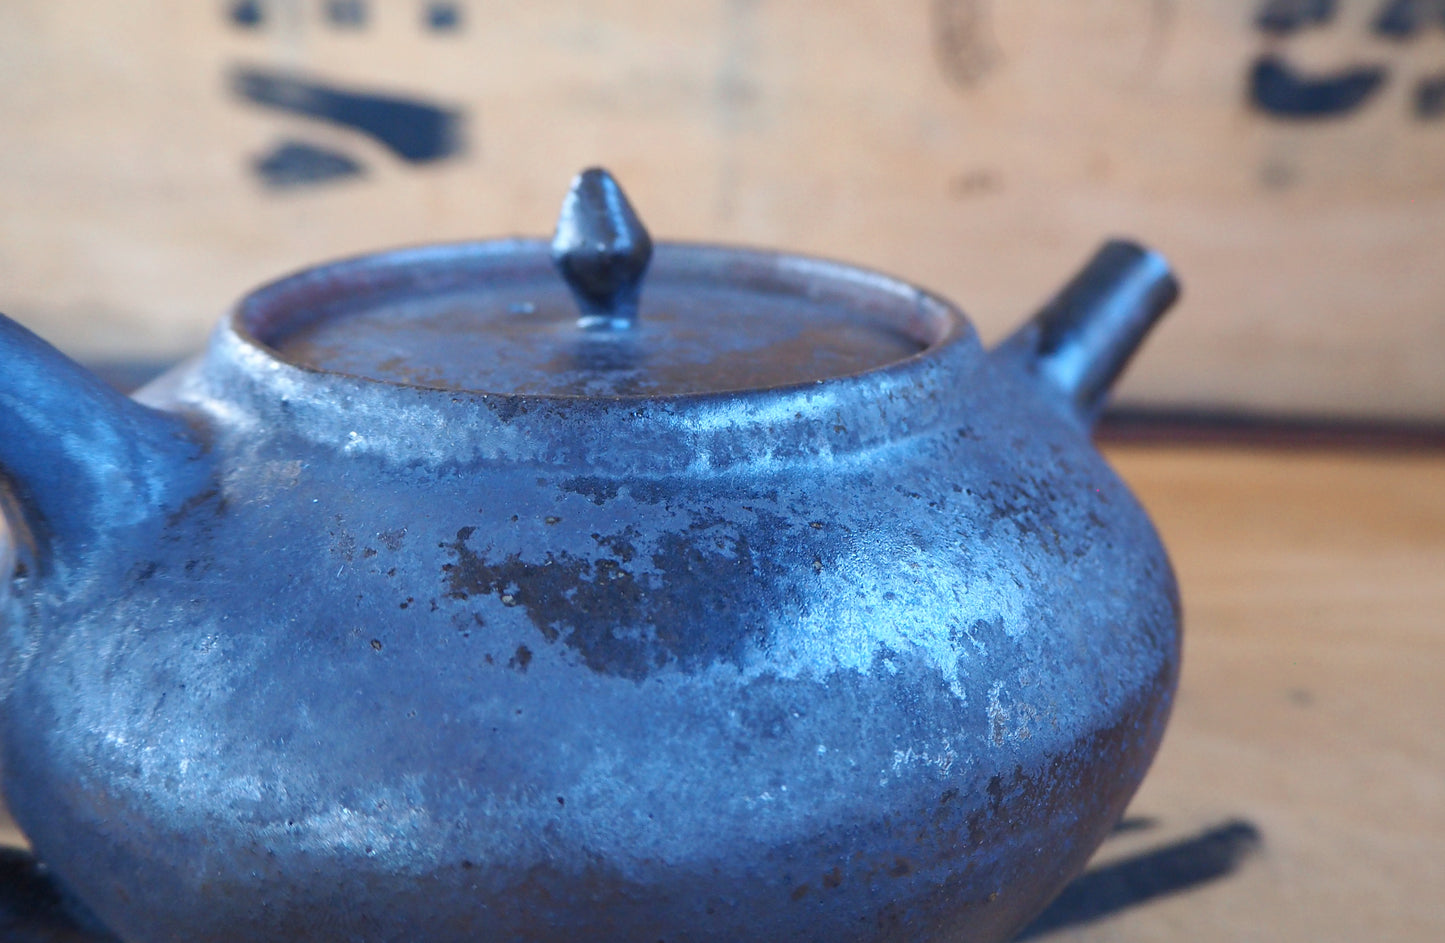 Iron Wash Teapot by Popalini & Jezando